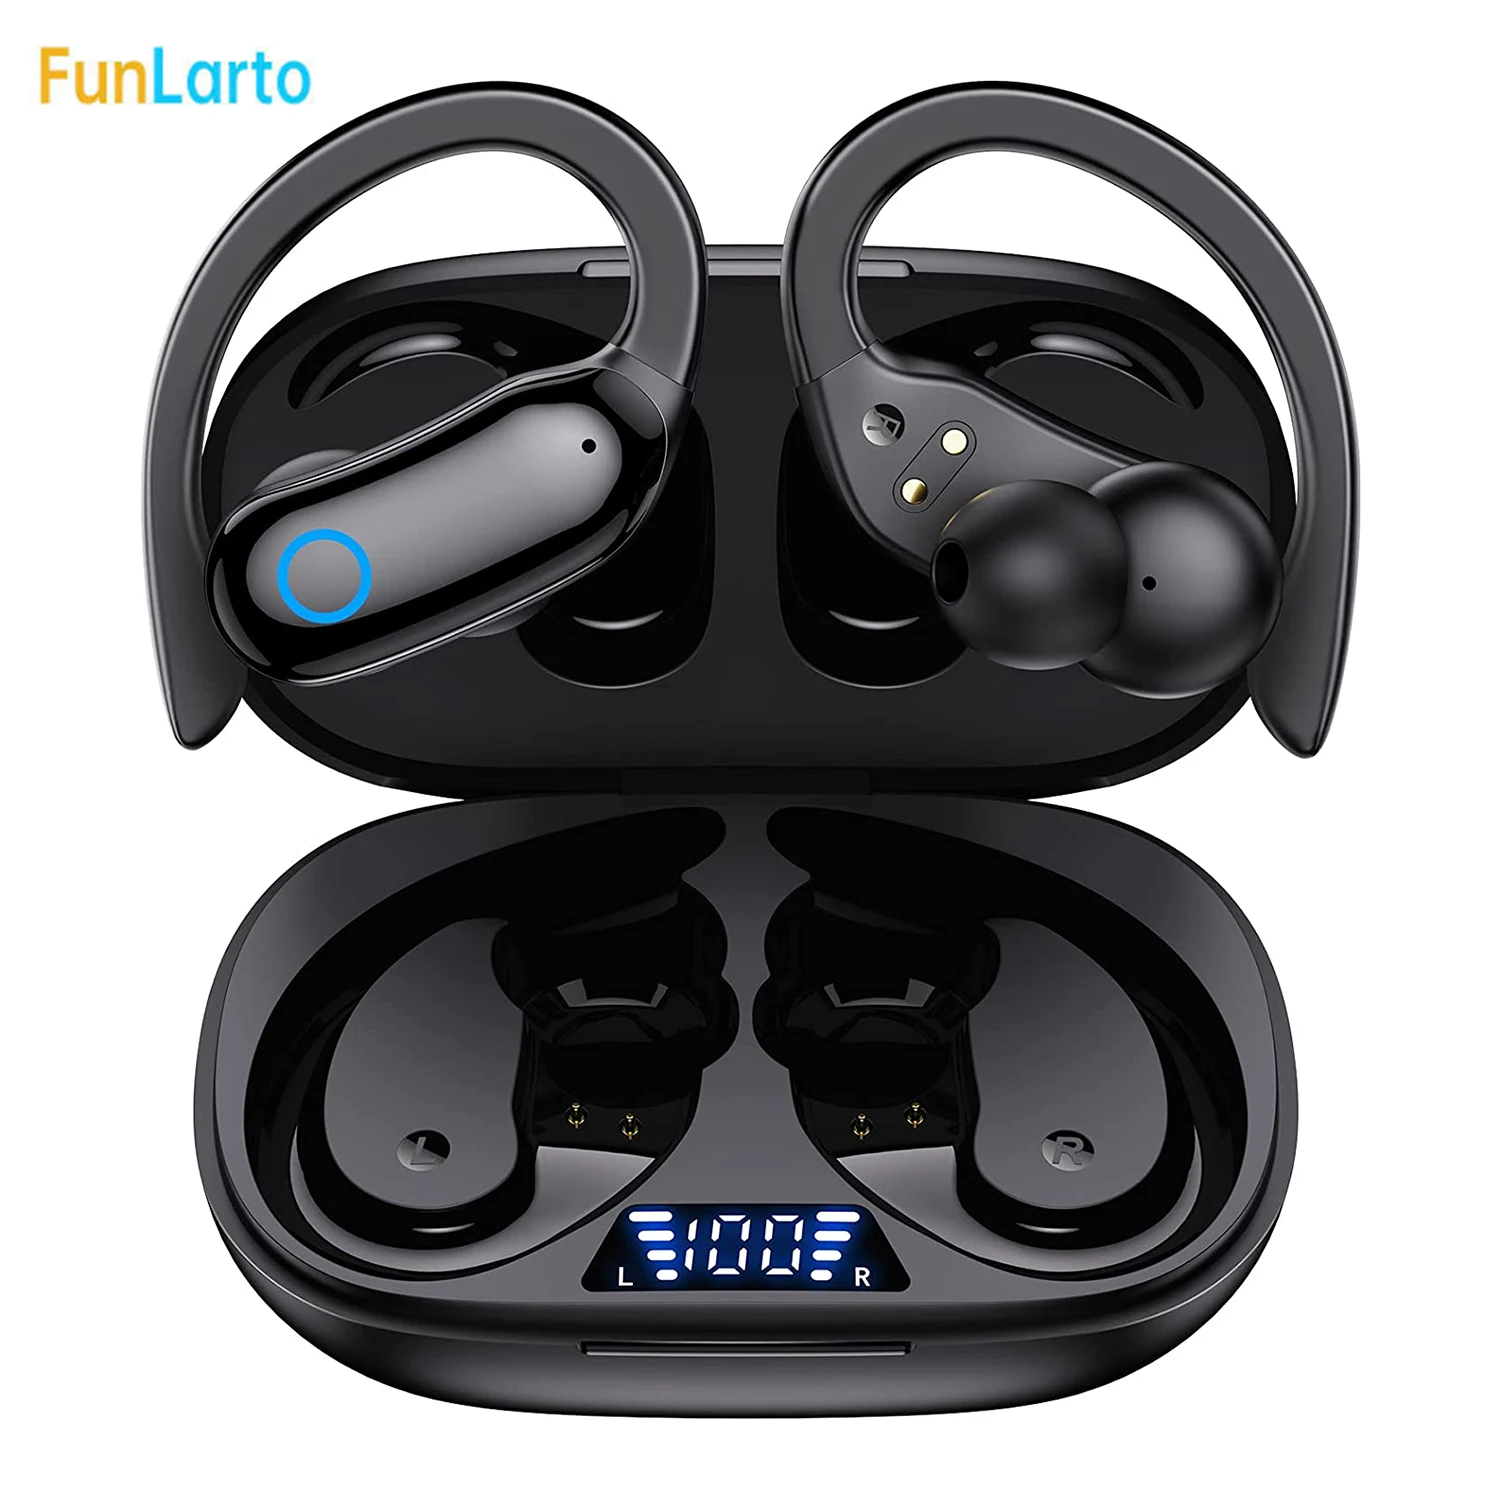 

Bluetooth Headphones Wireless Earbuds 48hrs Playback IPX7 Waterproof Earphones Over-Ear Stereo Bass Headset with Earhooks Mics